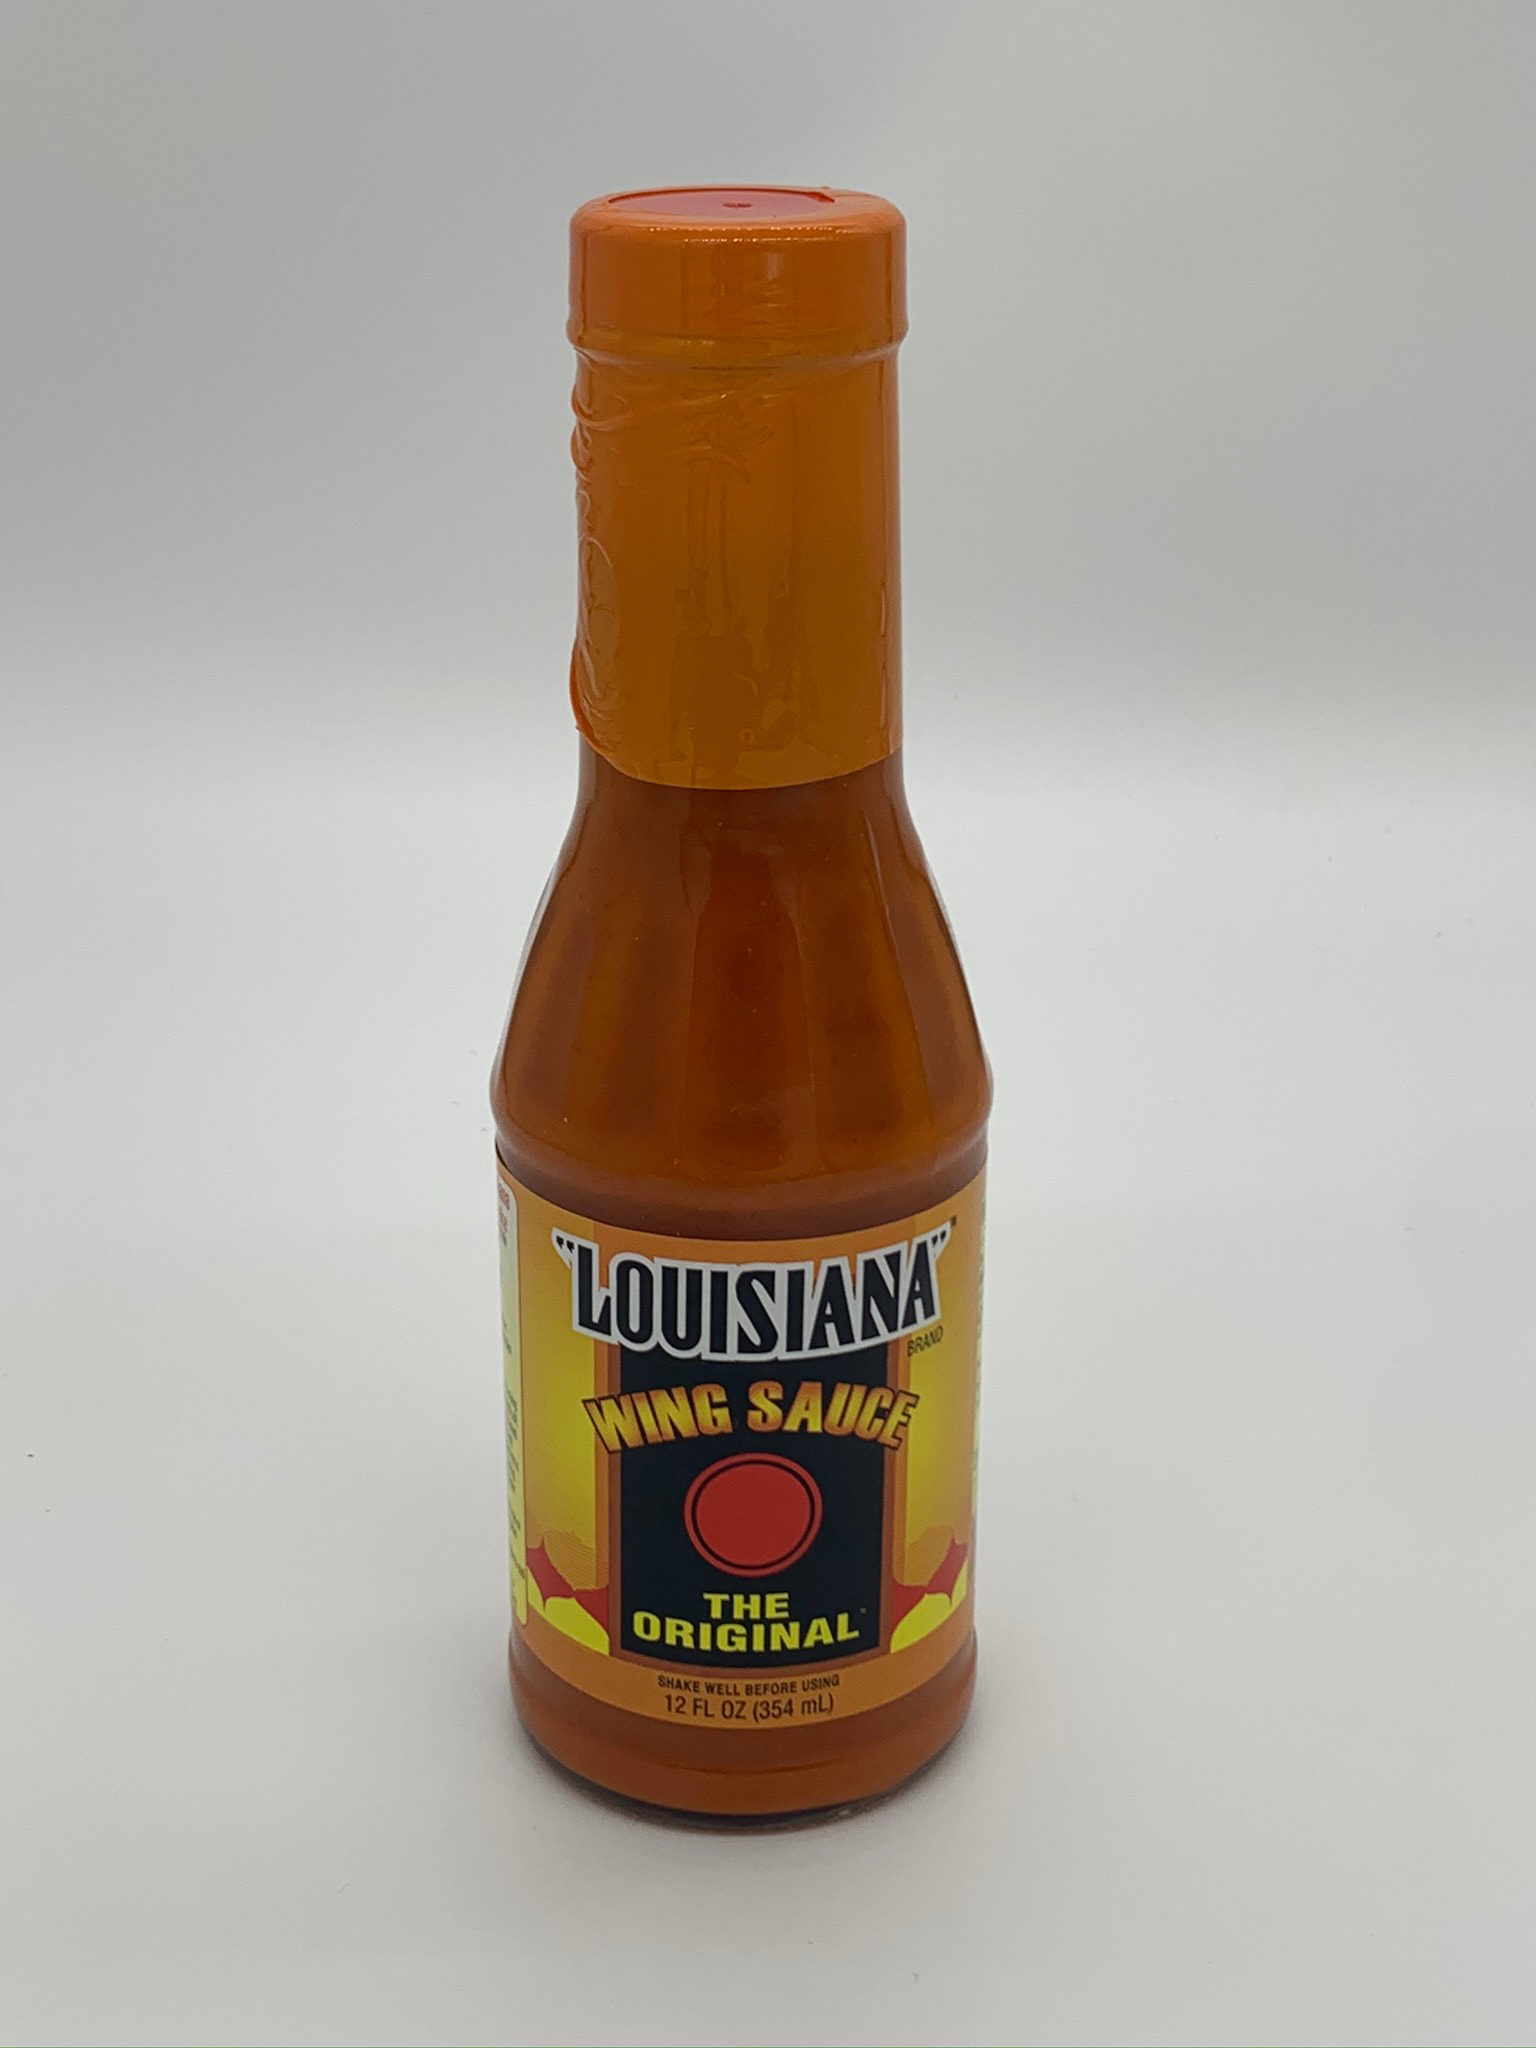 Wing Sauce, Original, The Original Louisiana Brand (12 fl oz.)